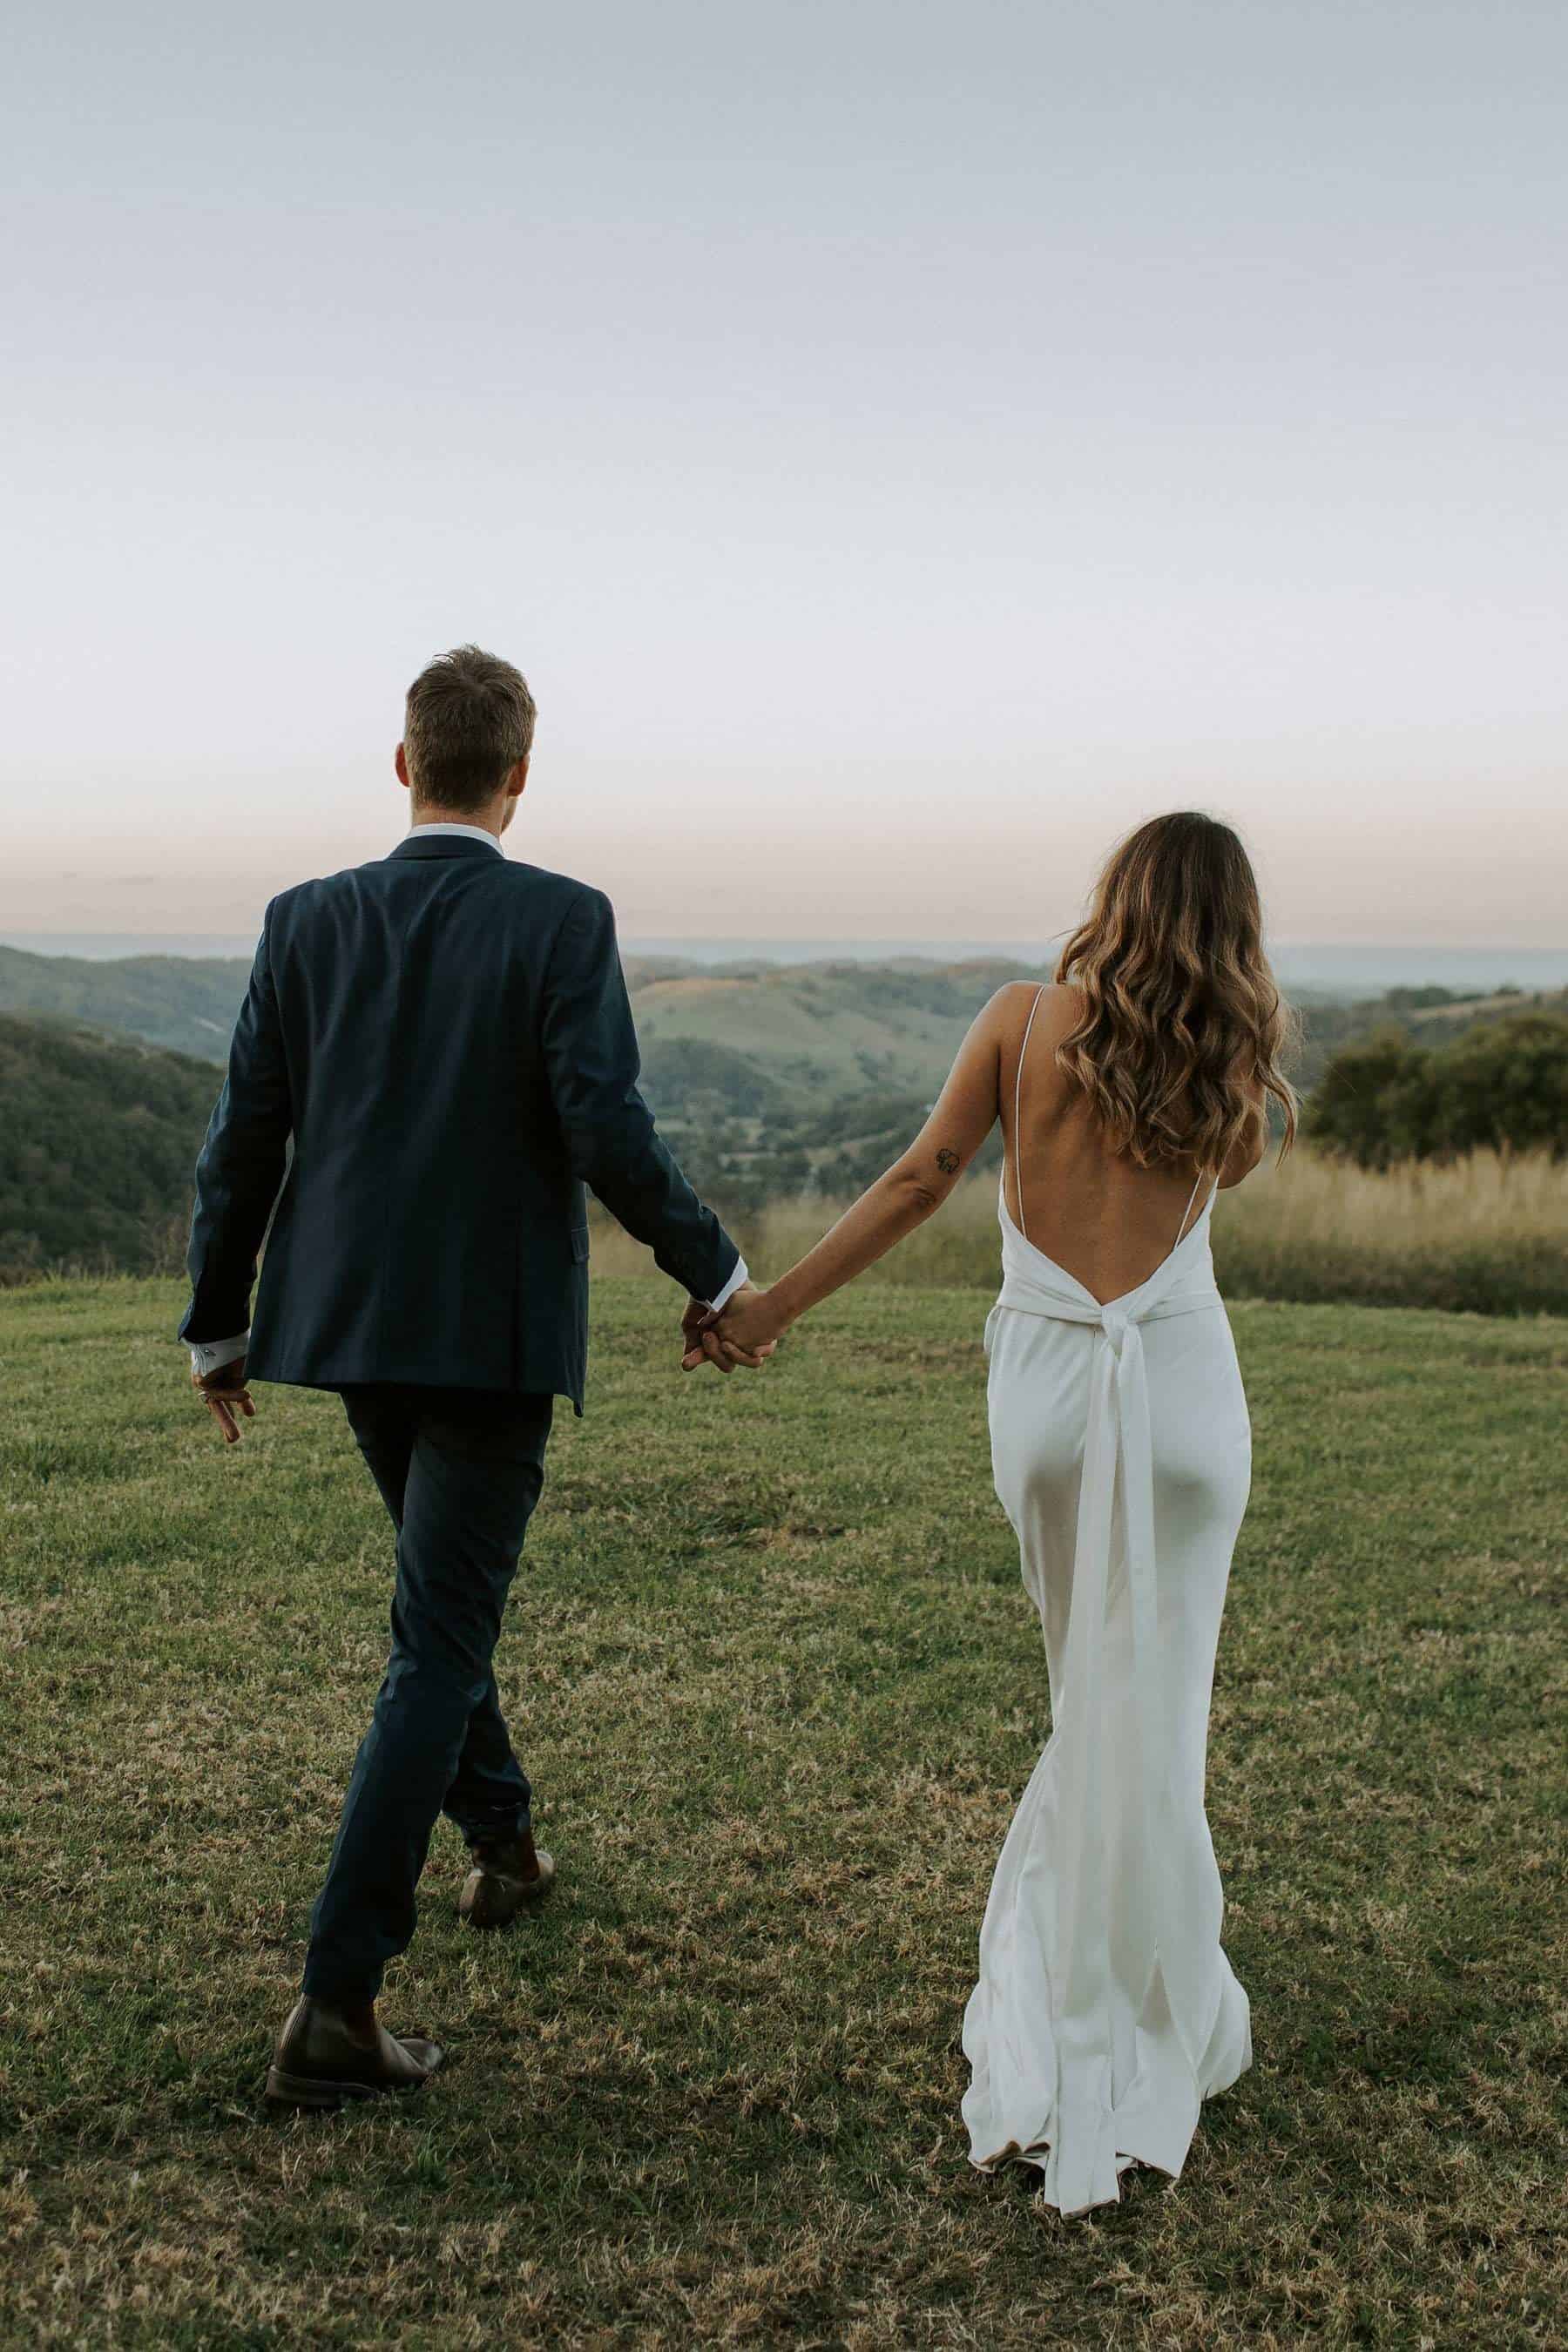 Best wedding dresses of 2019 - simple silk slip gown